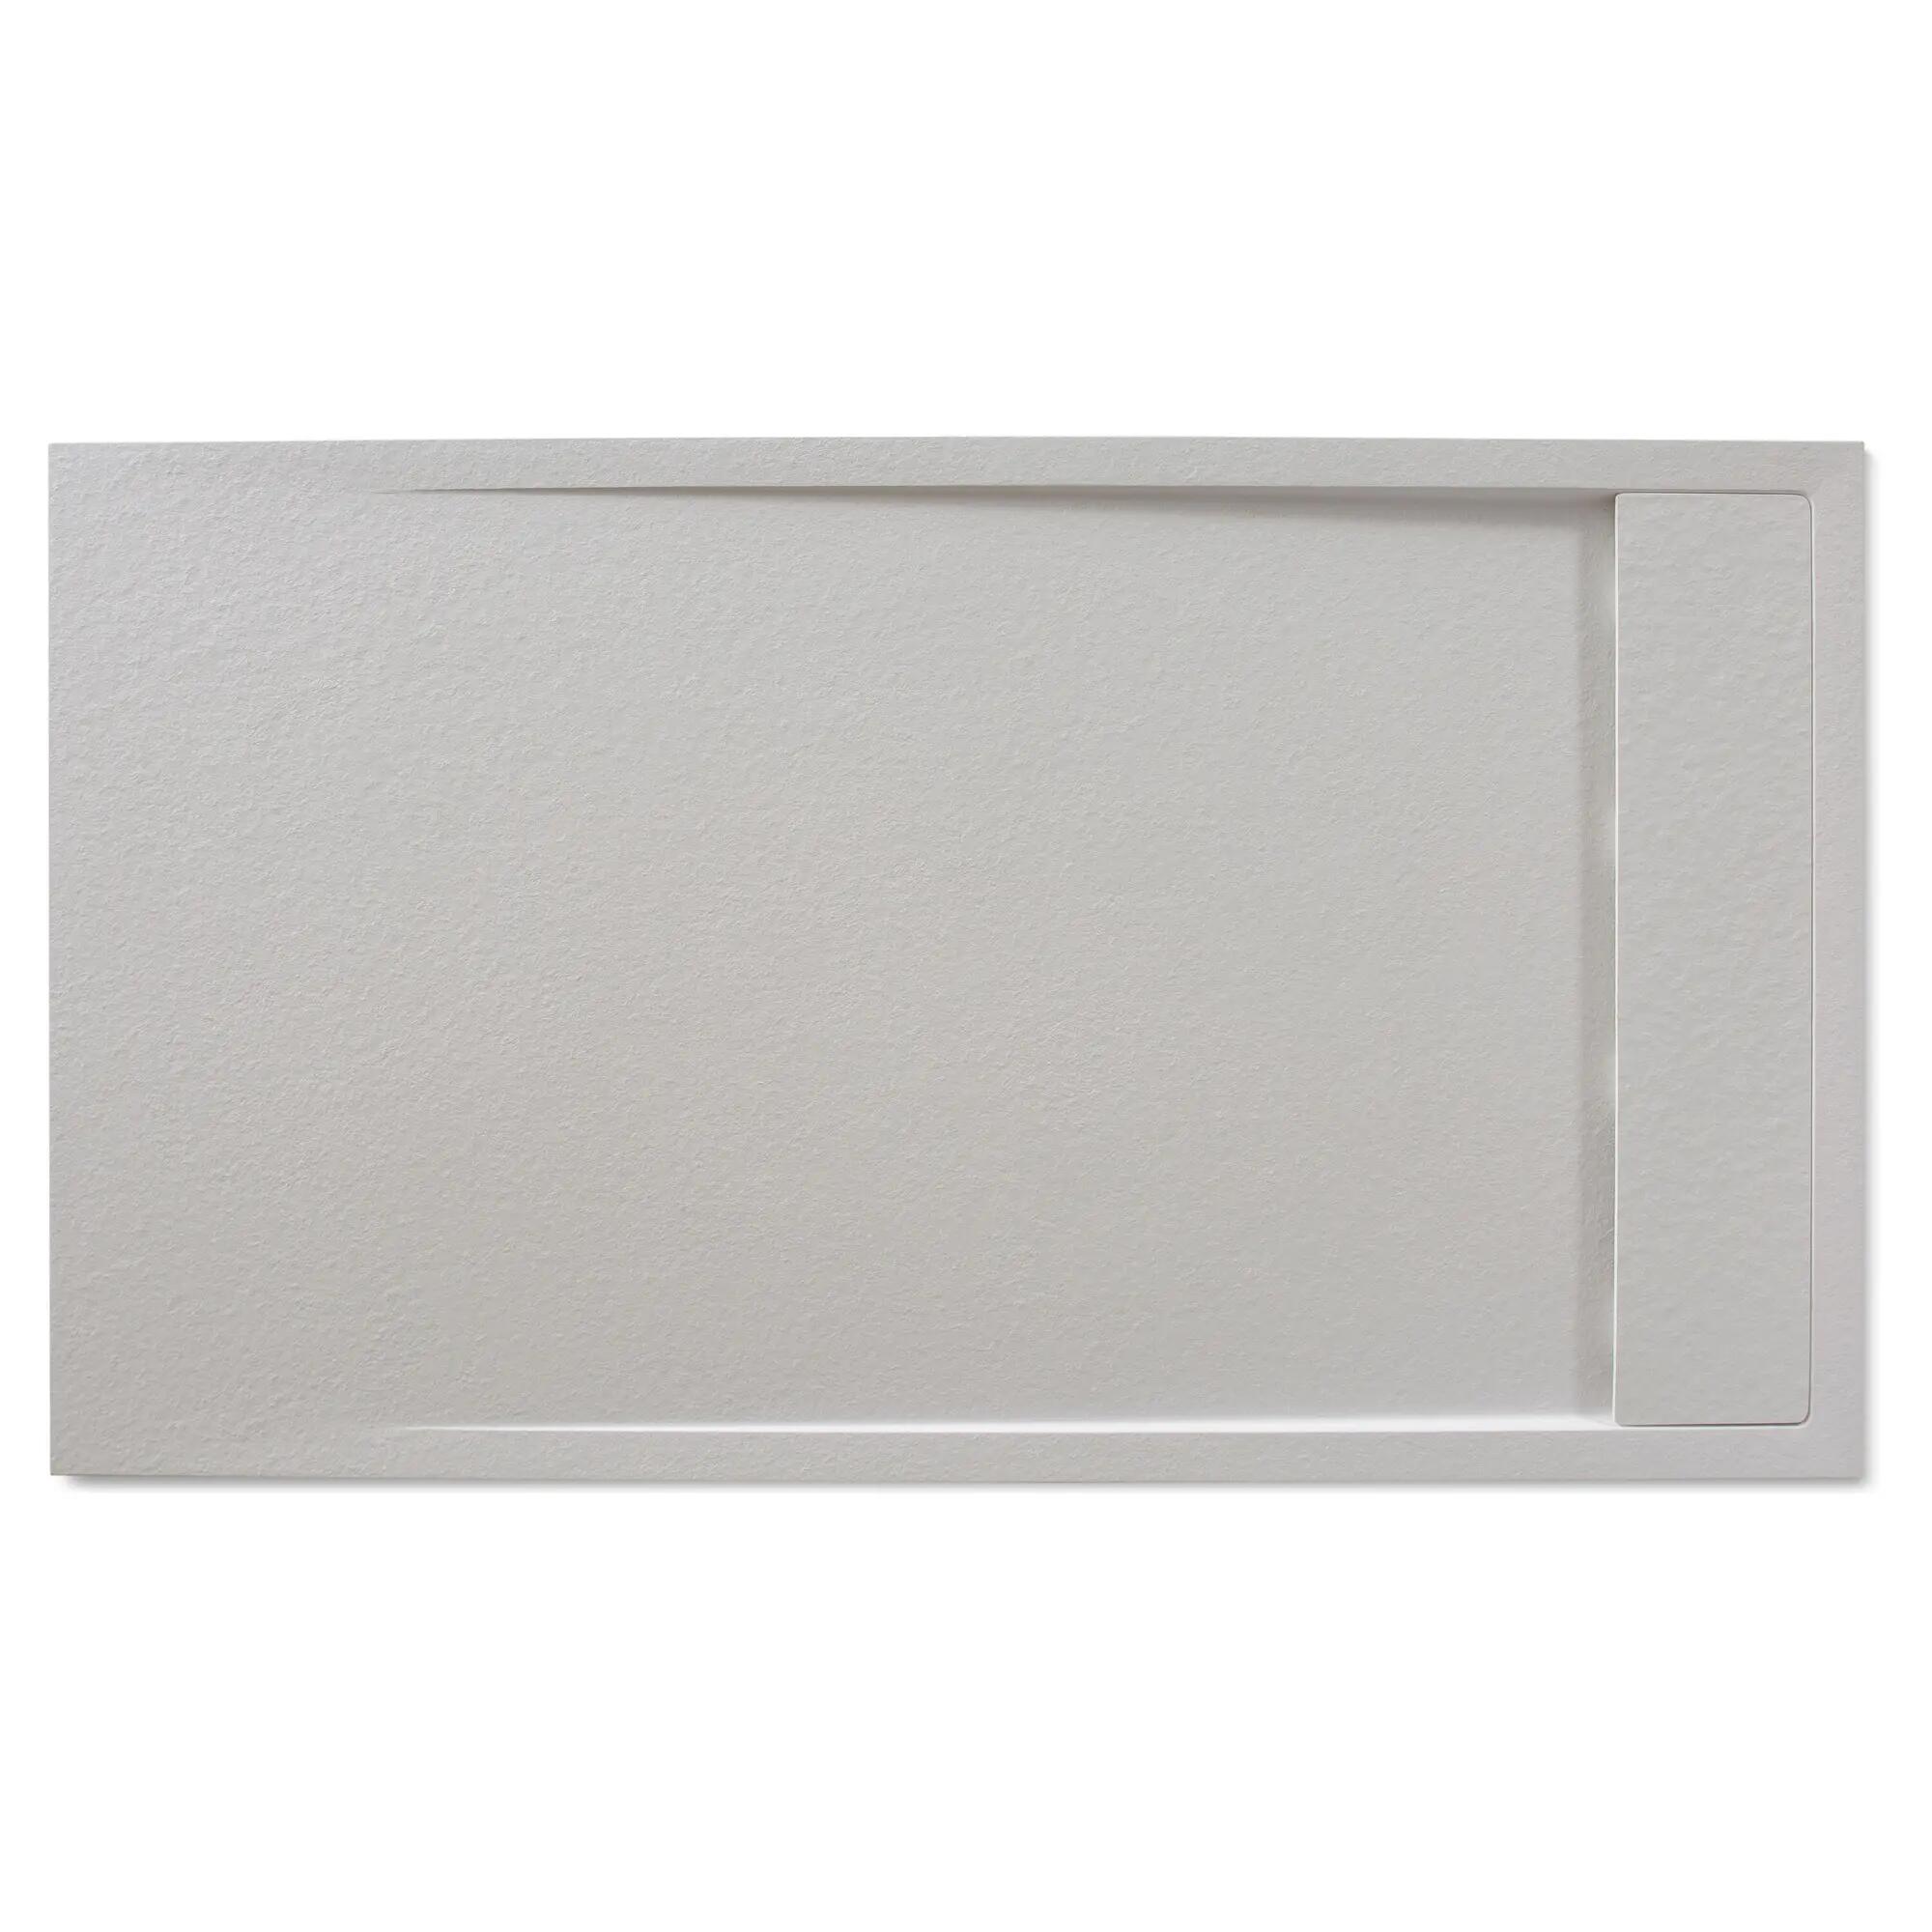 Piatto doccia gelcoat Neo 70 x 120 cm bianco - 9